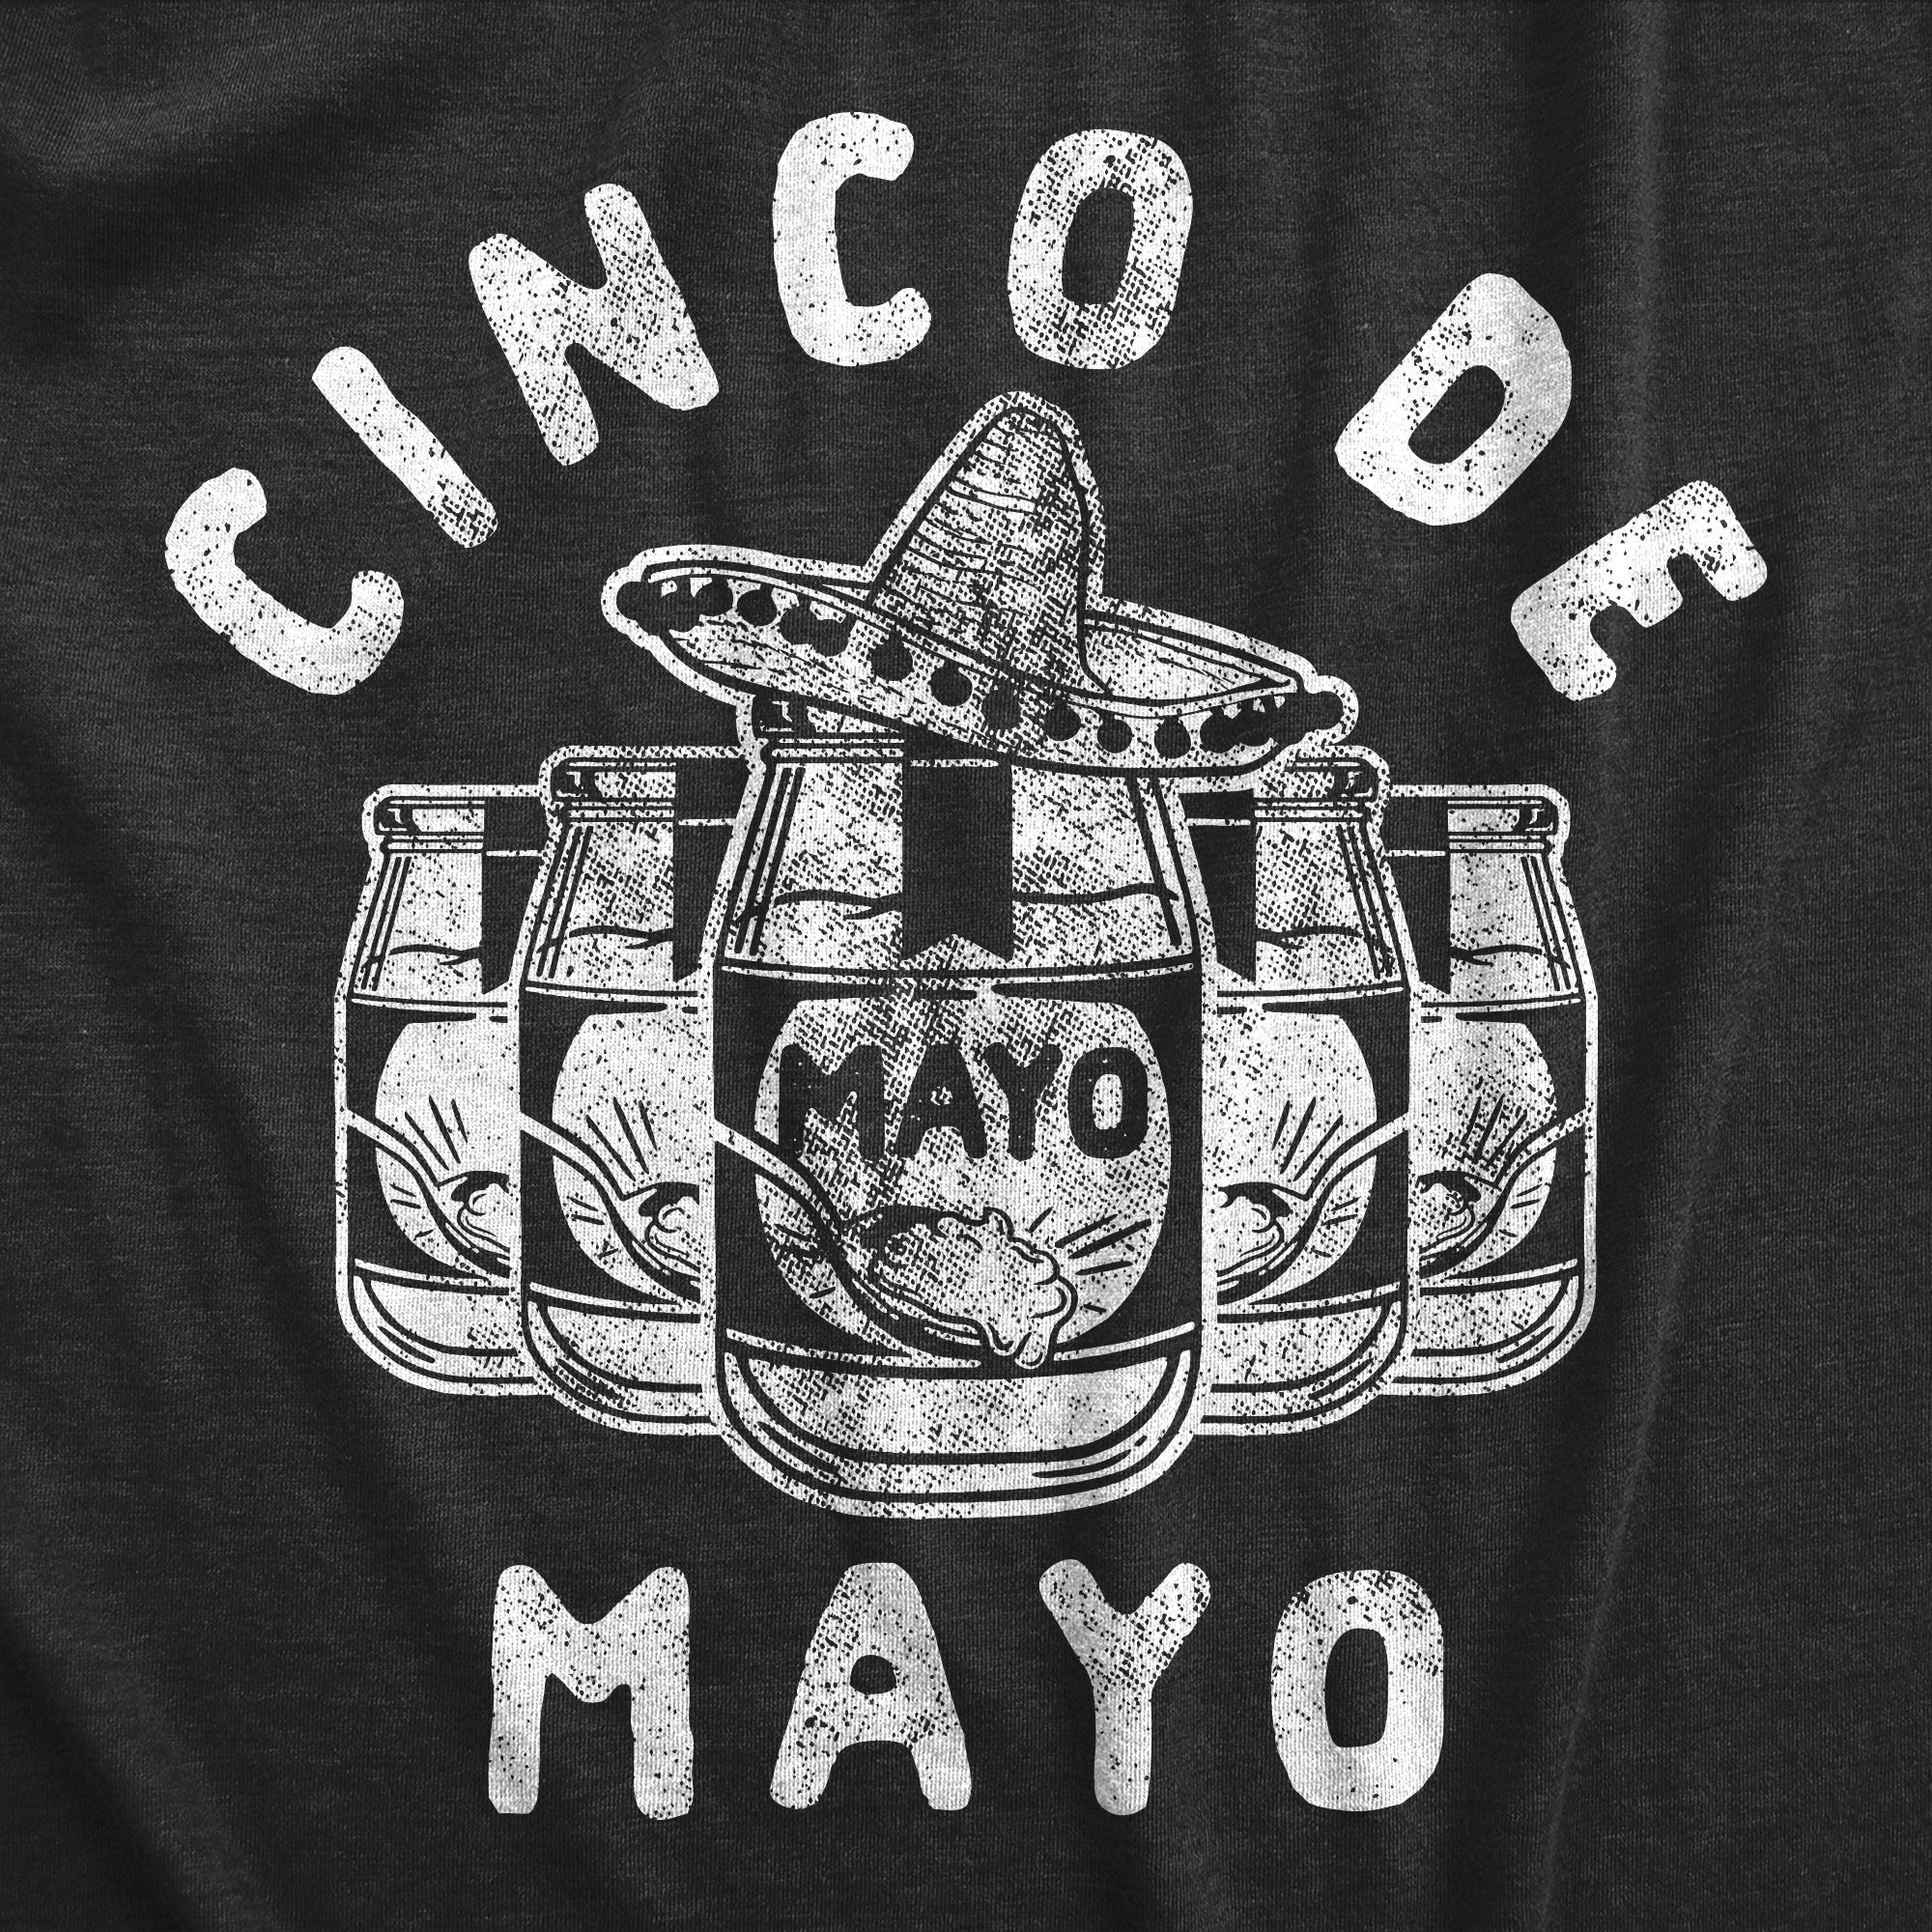 Funny Heather Black Cinco De Mayo Womens T Shirt Nerdy Cinco De Mayo Food Tee